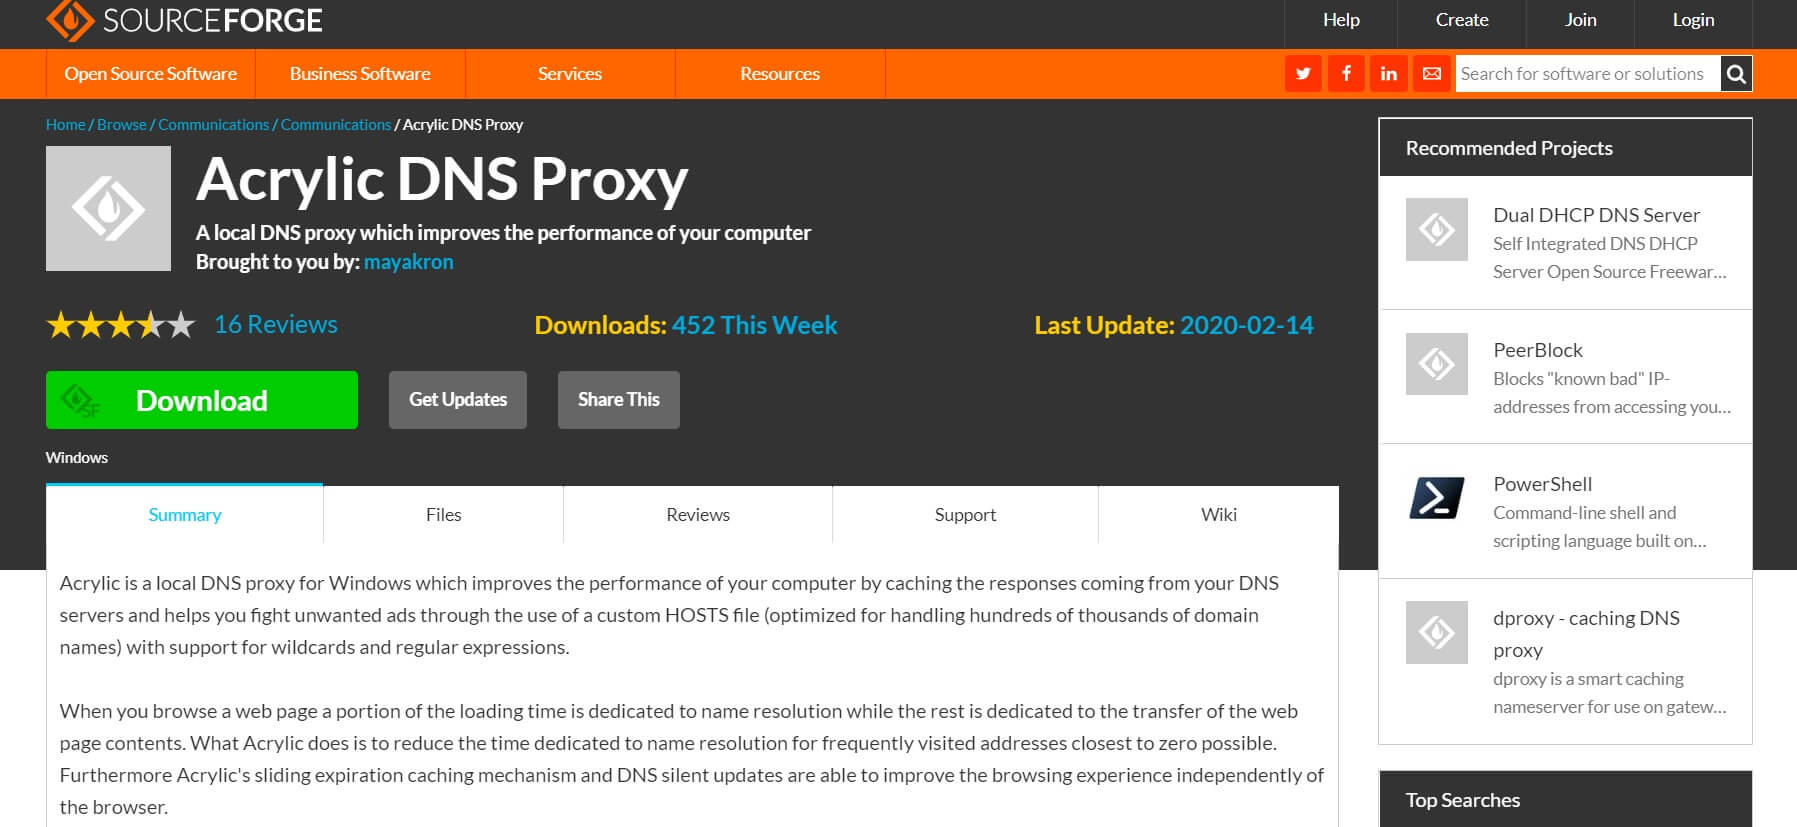 Acrylic DNS Proxy | Free Proxy Software For Windows 10